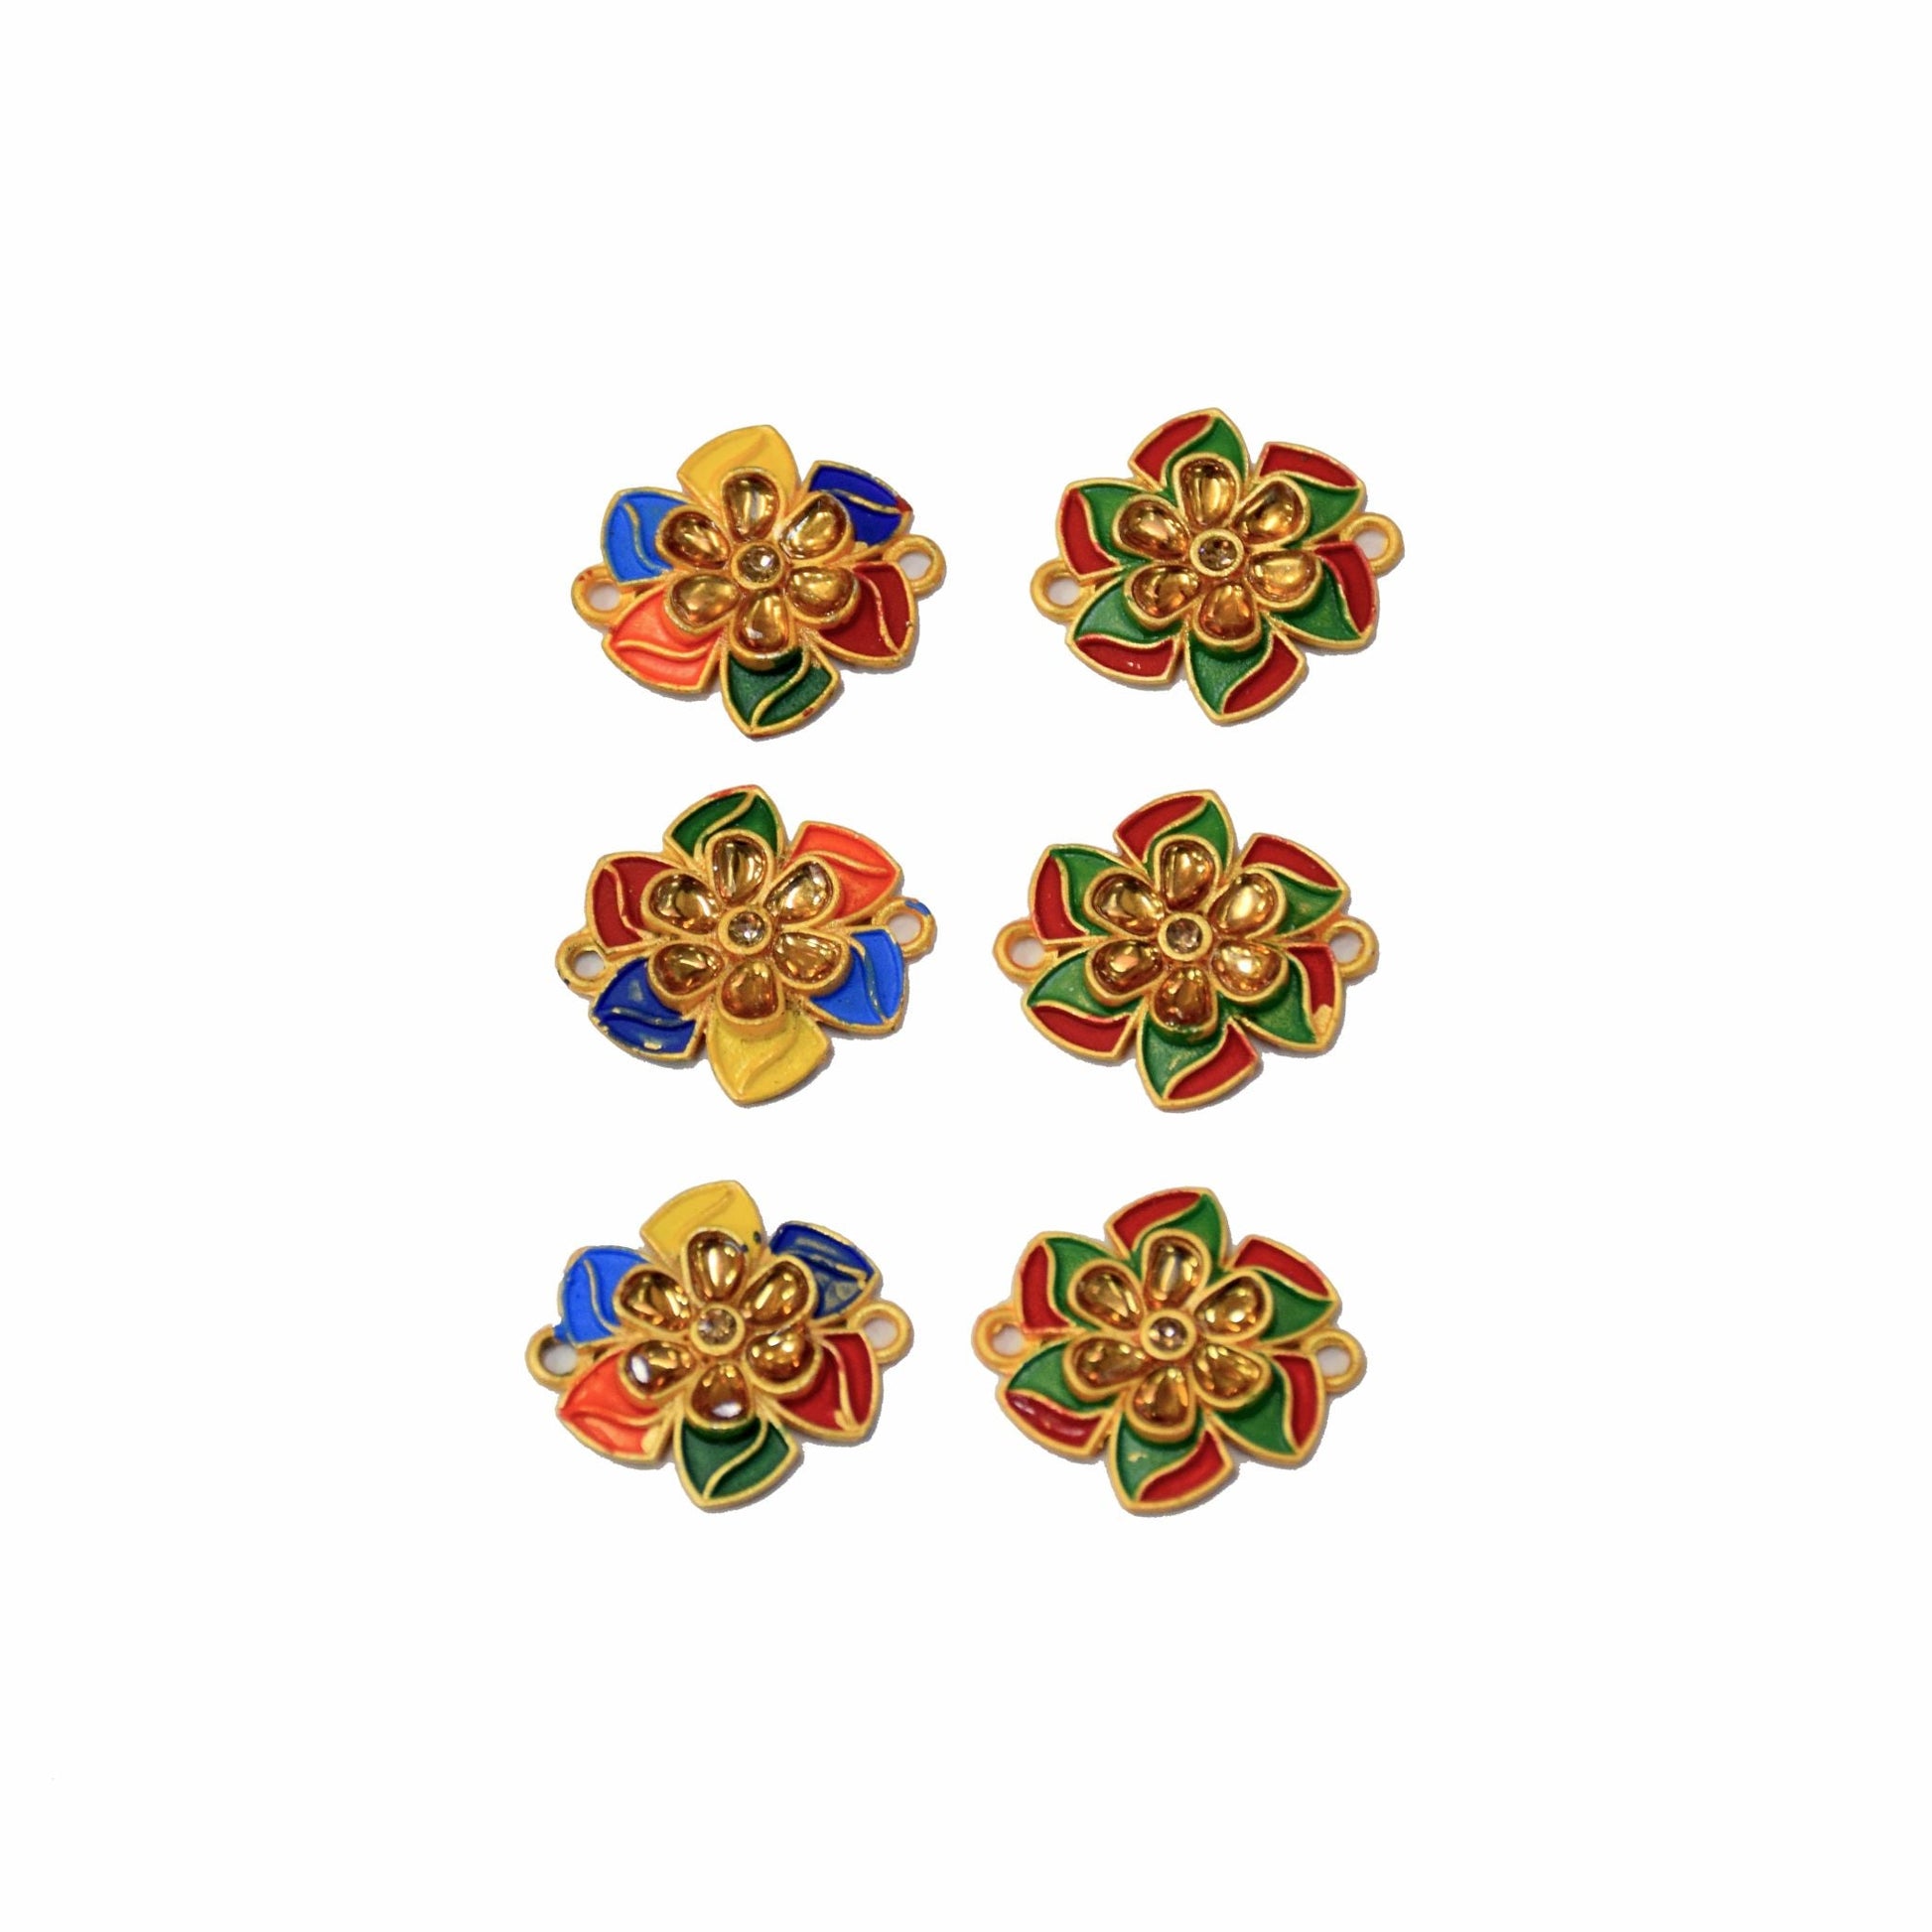 Indian Petals Enamel painted Beautiful Metal Traditional Design Motif for Craft Decoration or Rakhi - 12500